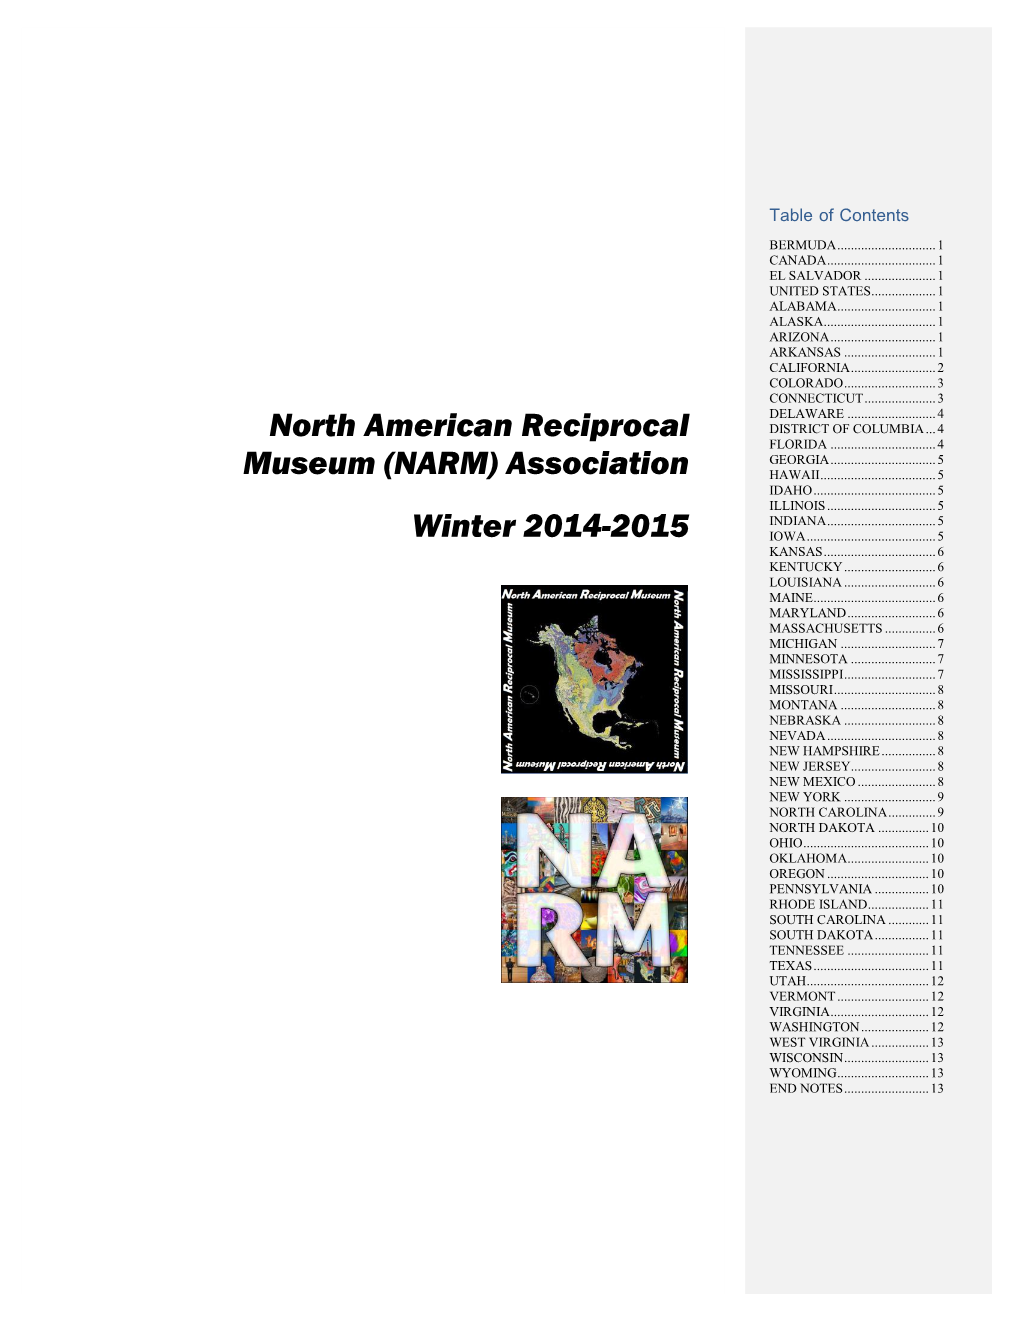 North Americanreciprocal Museum